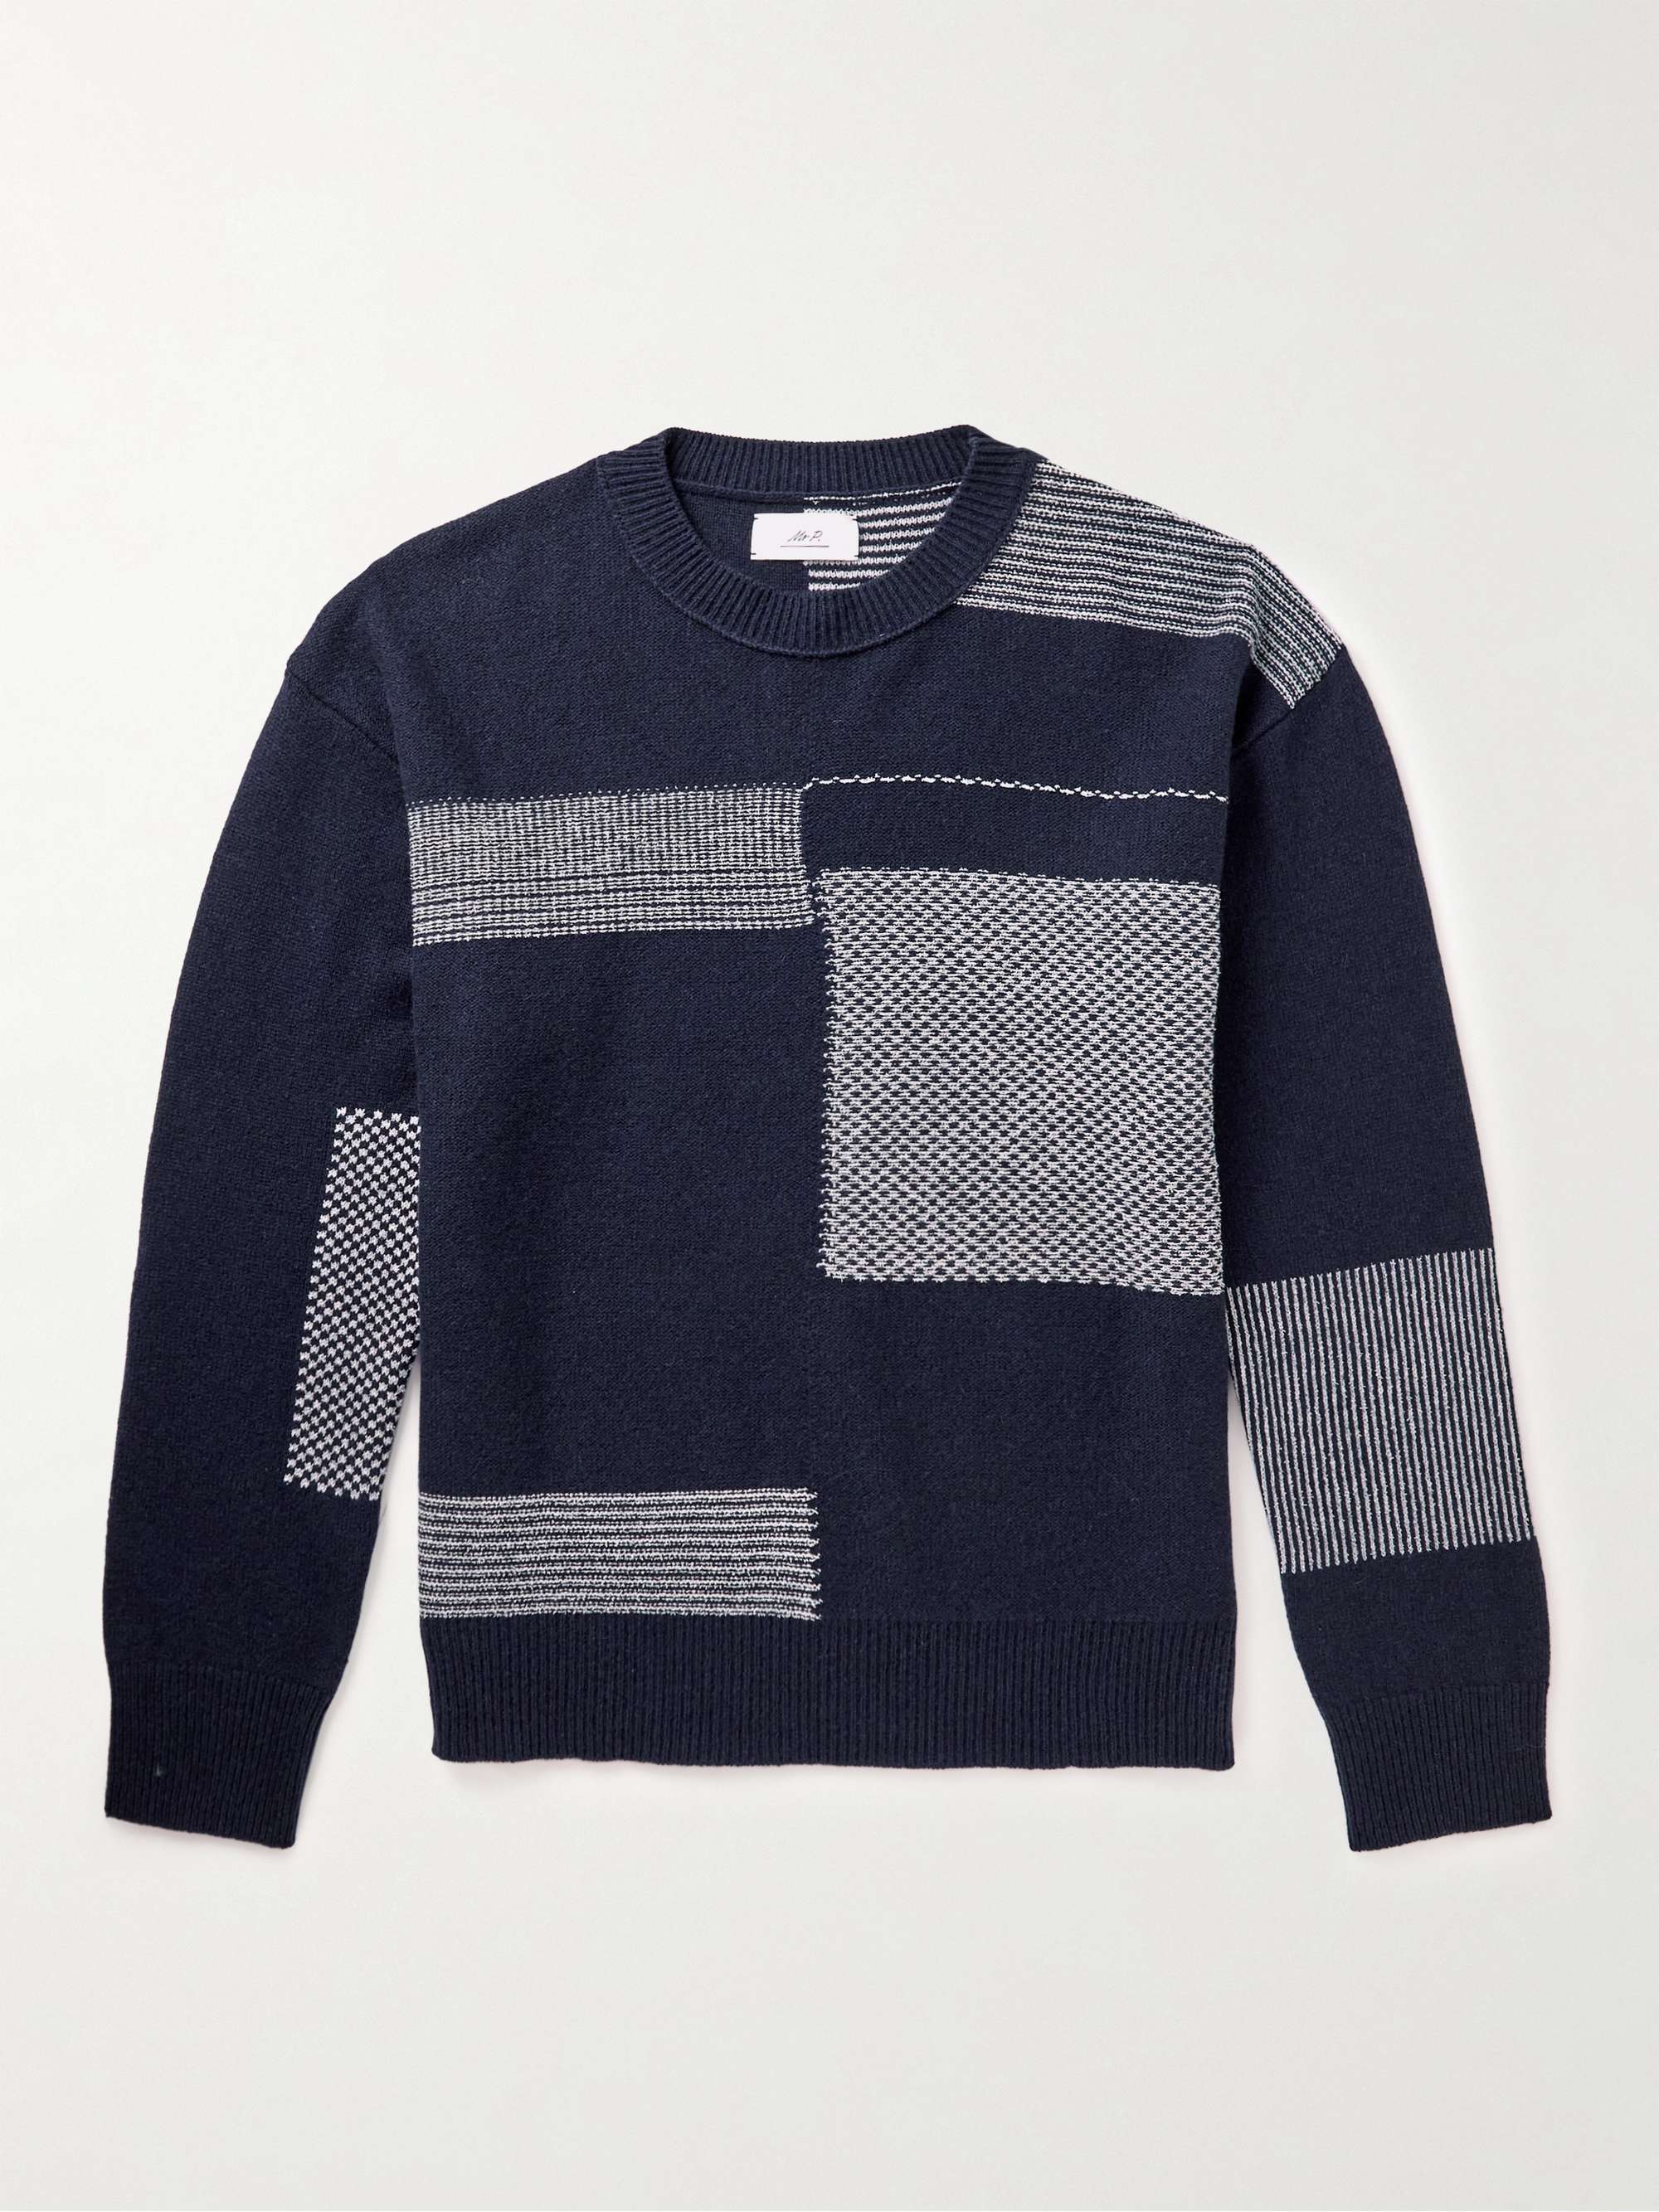 MR P. Jacquard-Knit Cashmere-Blend Sweater